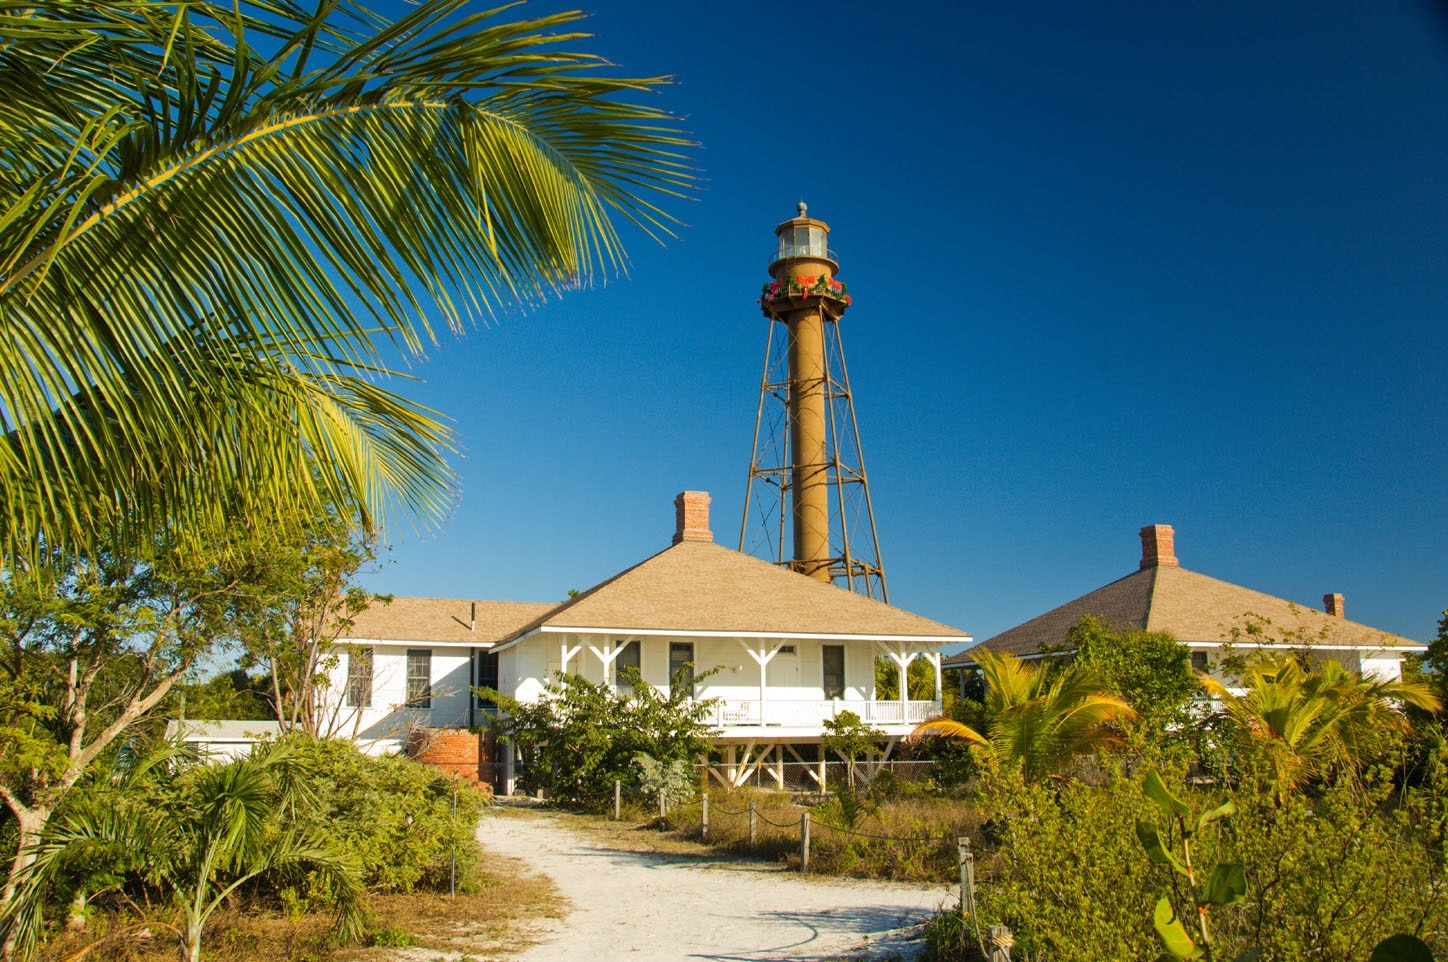 Sanibel Captiva Island, Florida, United States of America